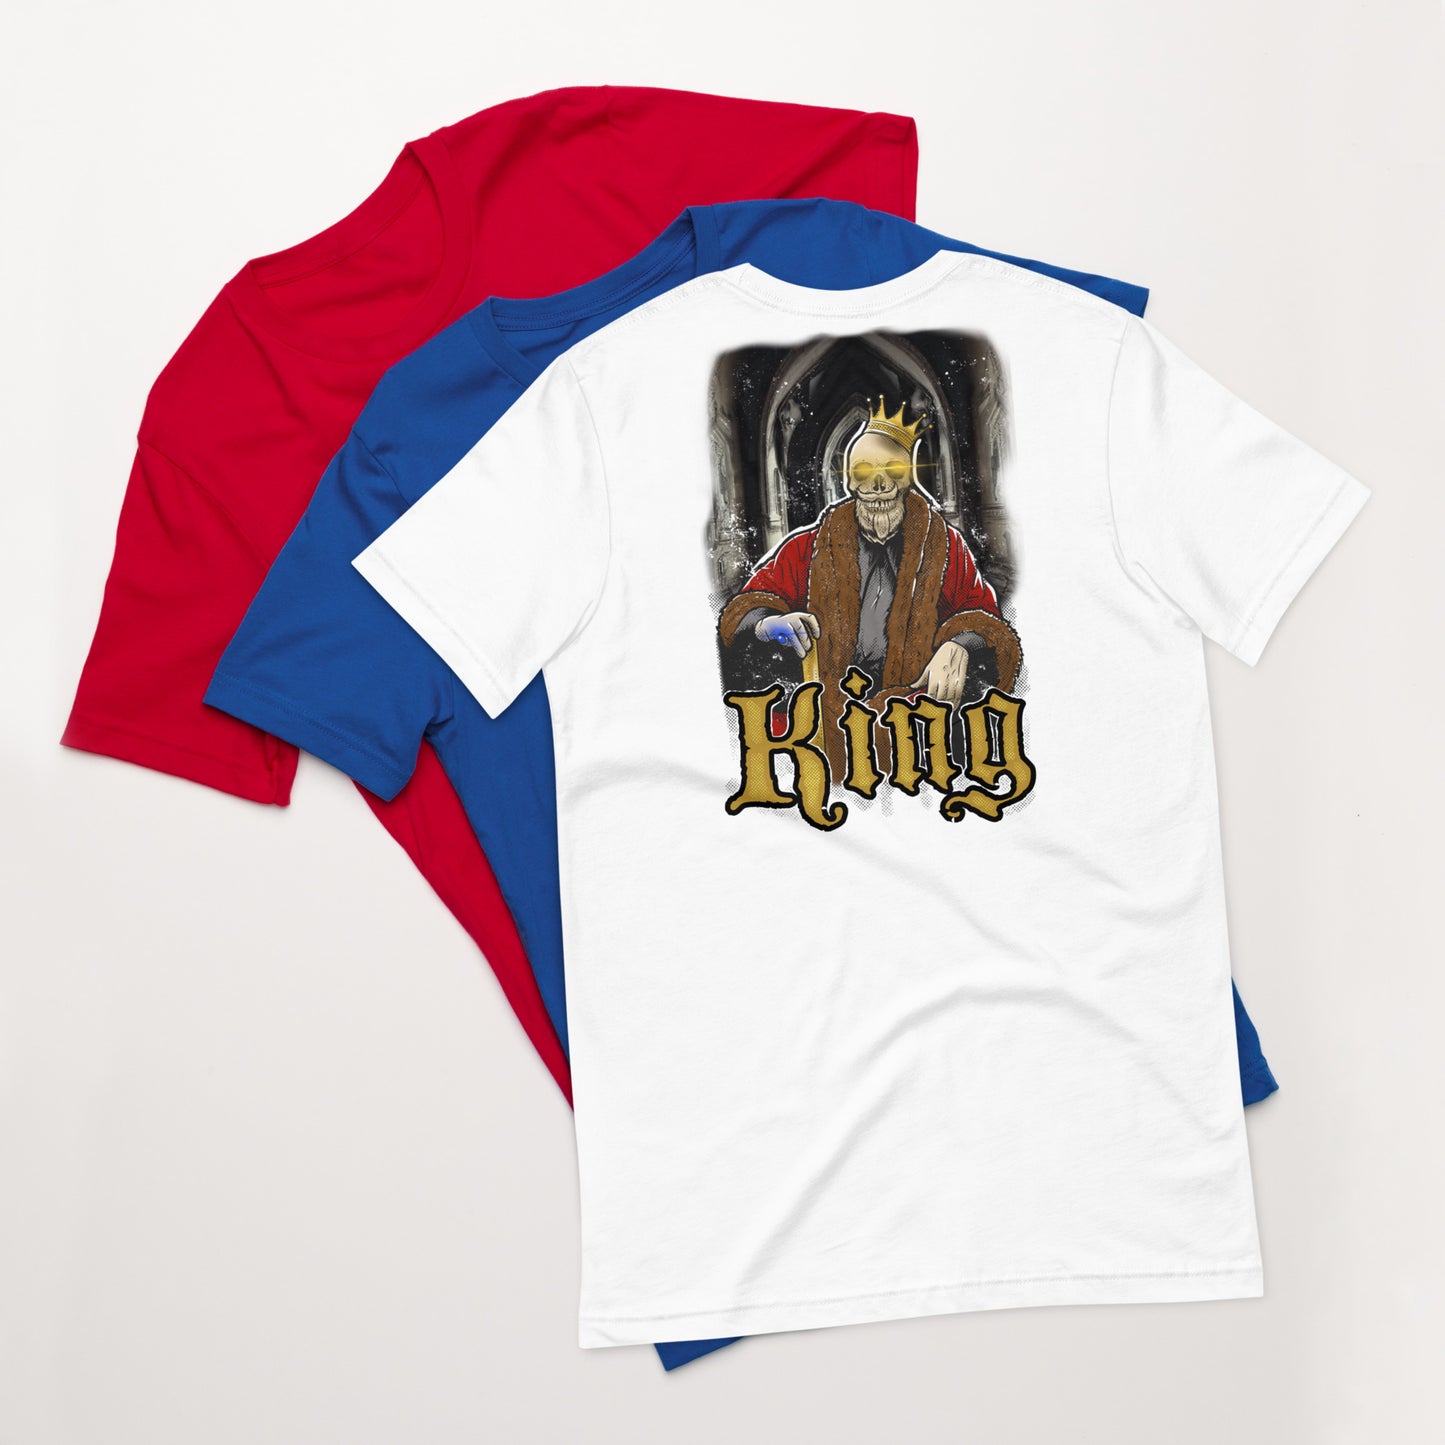 Unisex t-shirt (King)